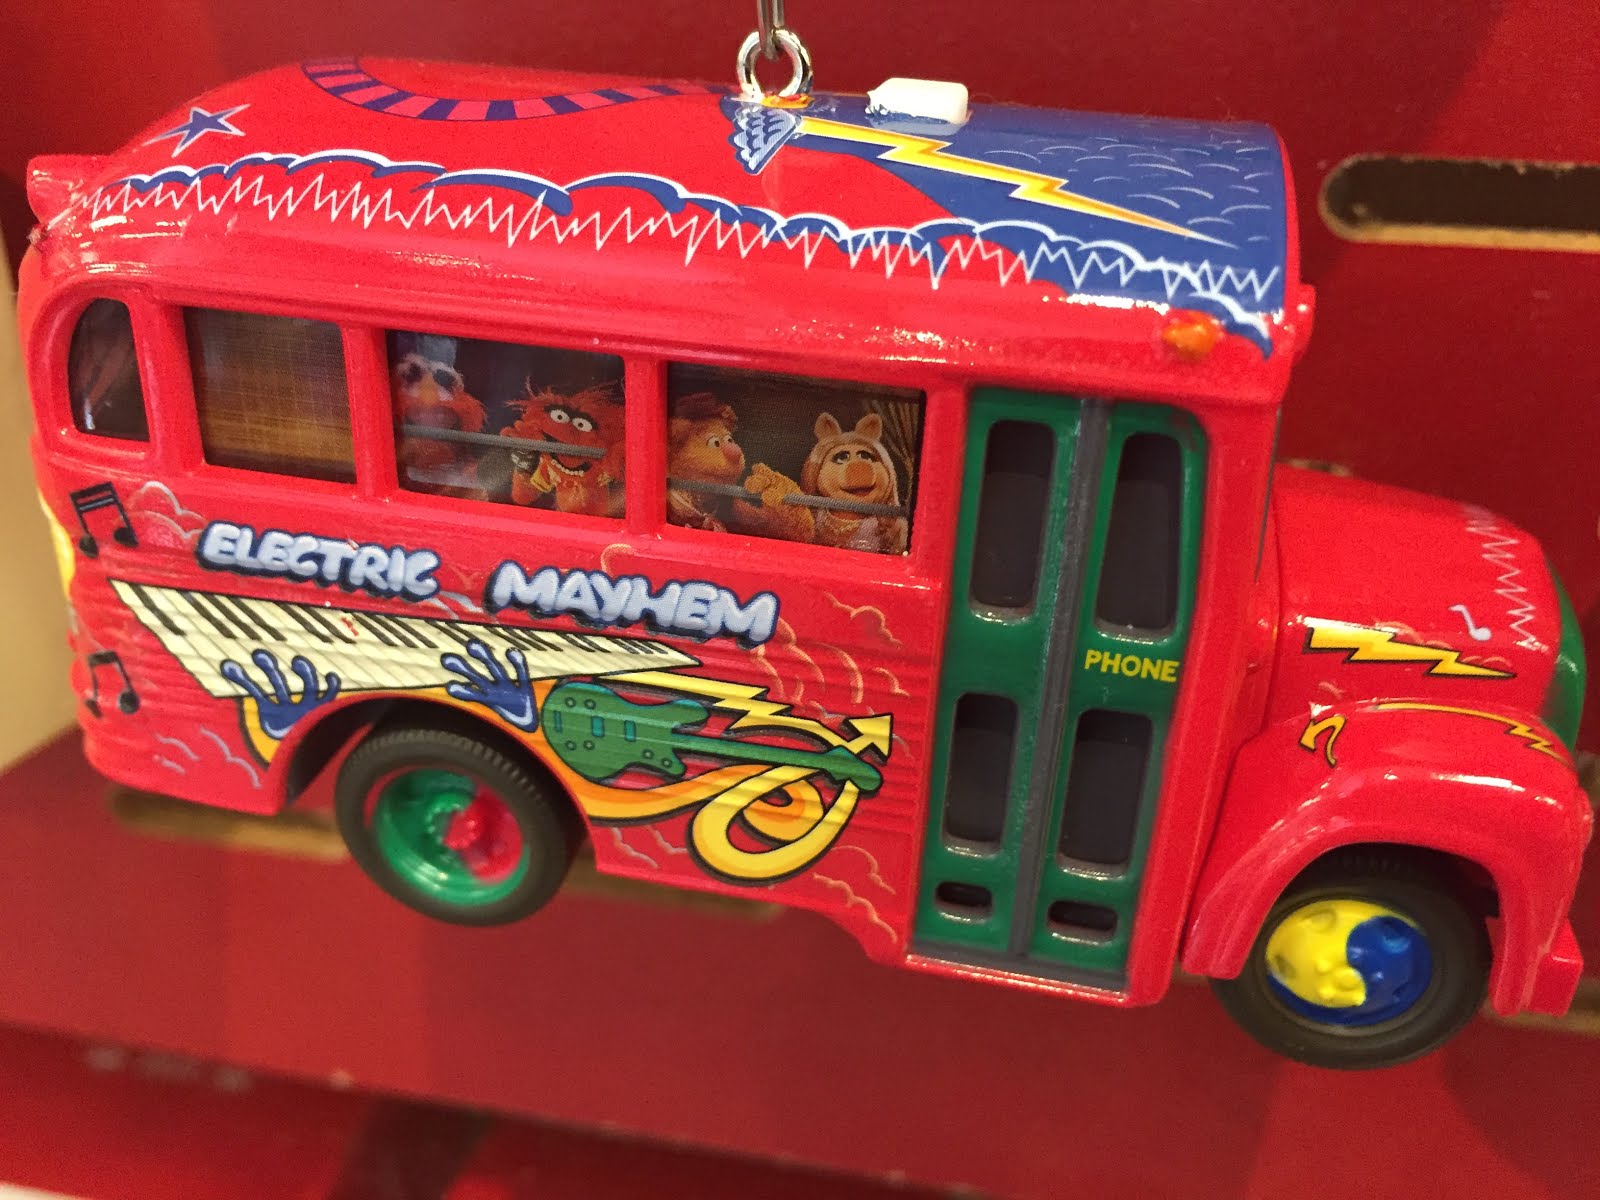 Muppet Stuff: Review: Hallmark Electric Mayhem Bus Ornament!